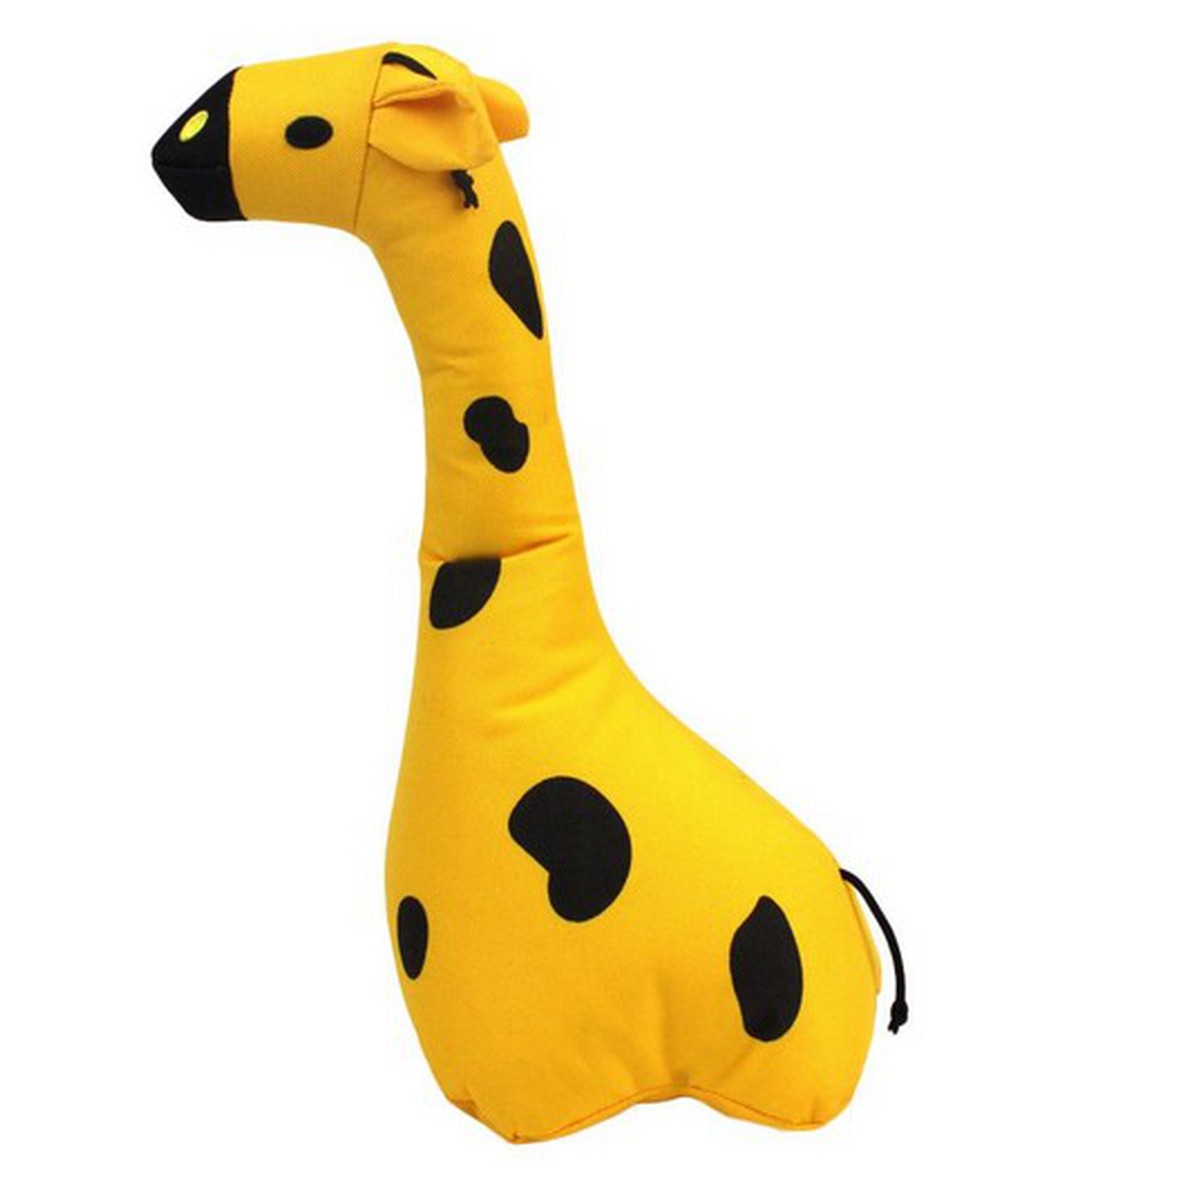   Beco Soft Toy - Giraffe - Large  Large